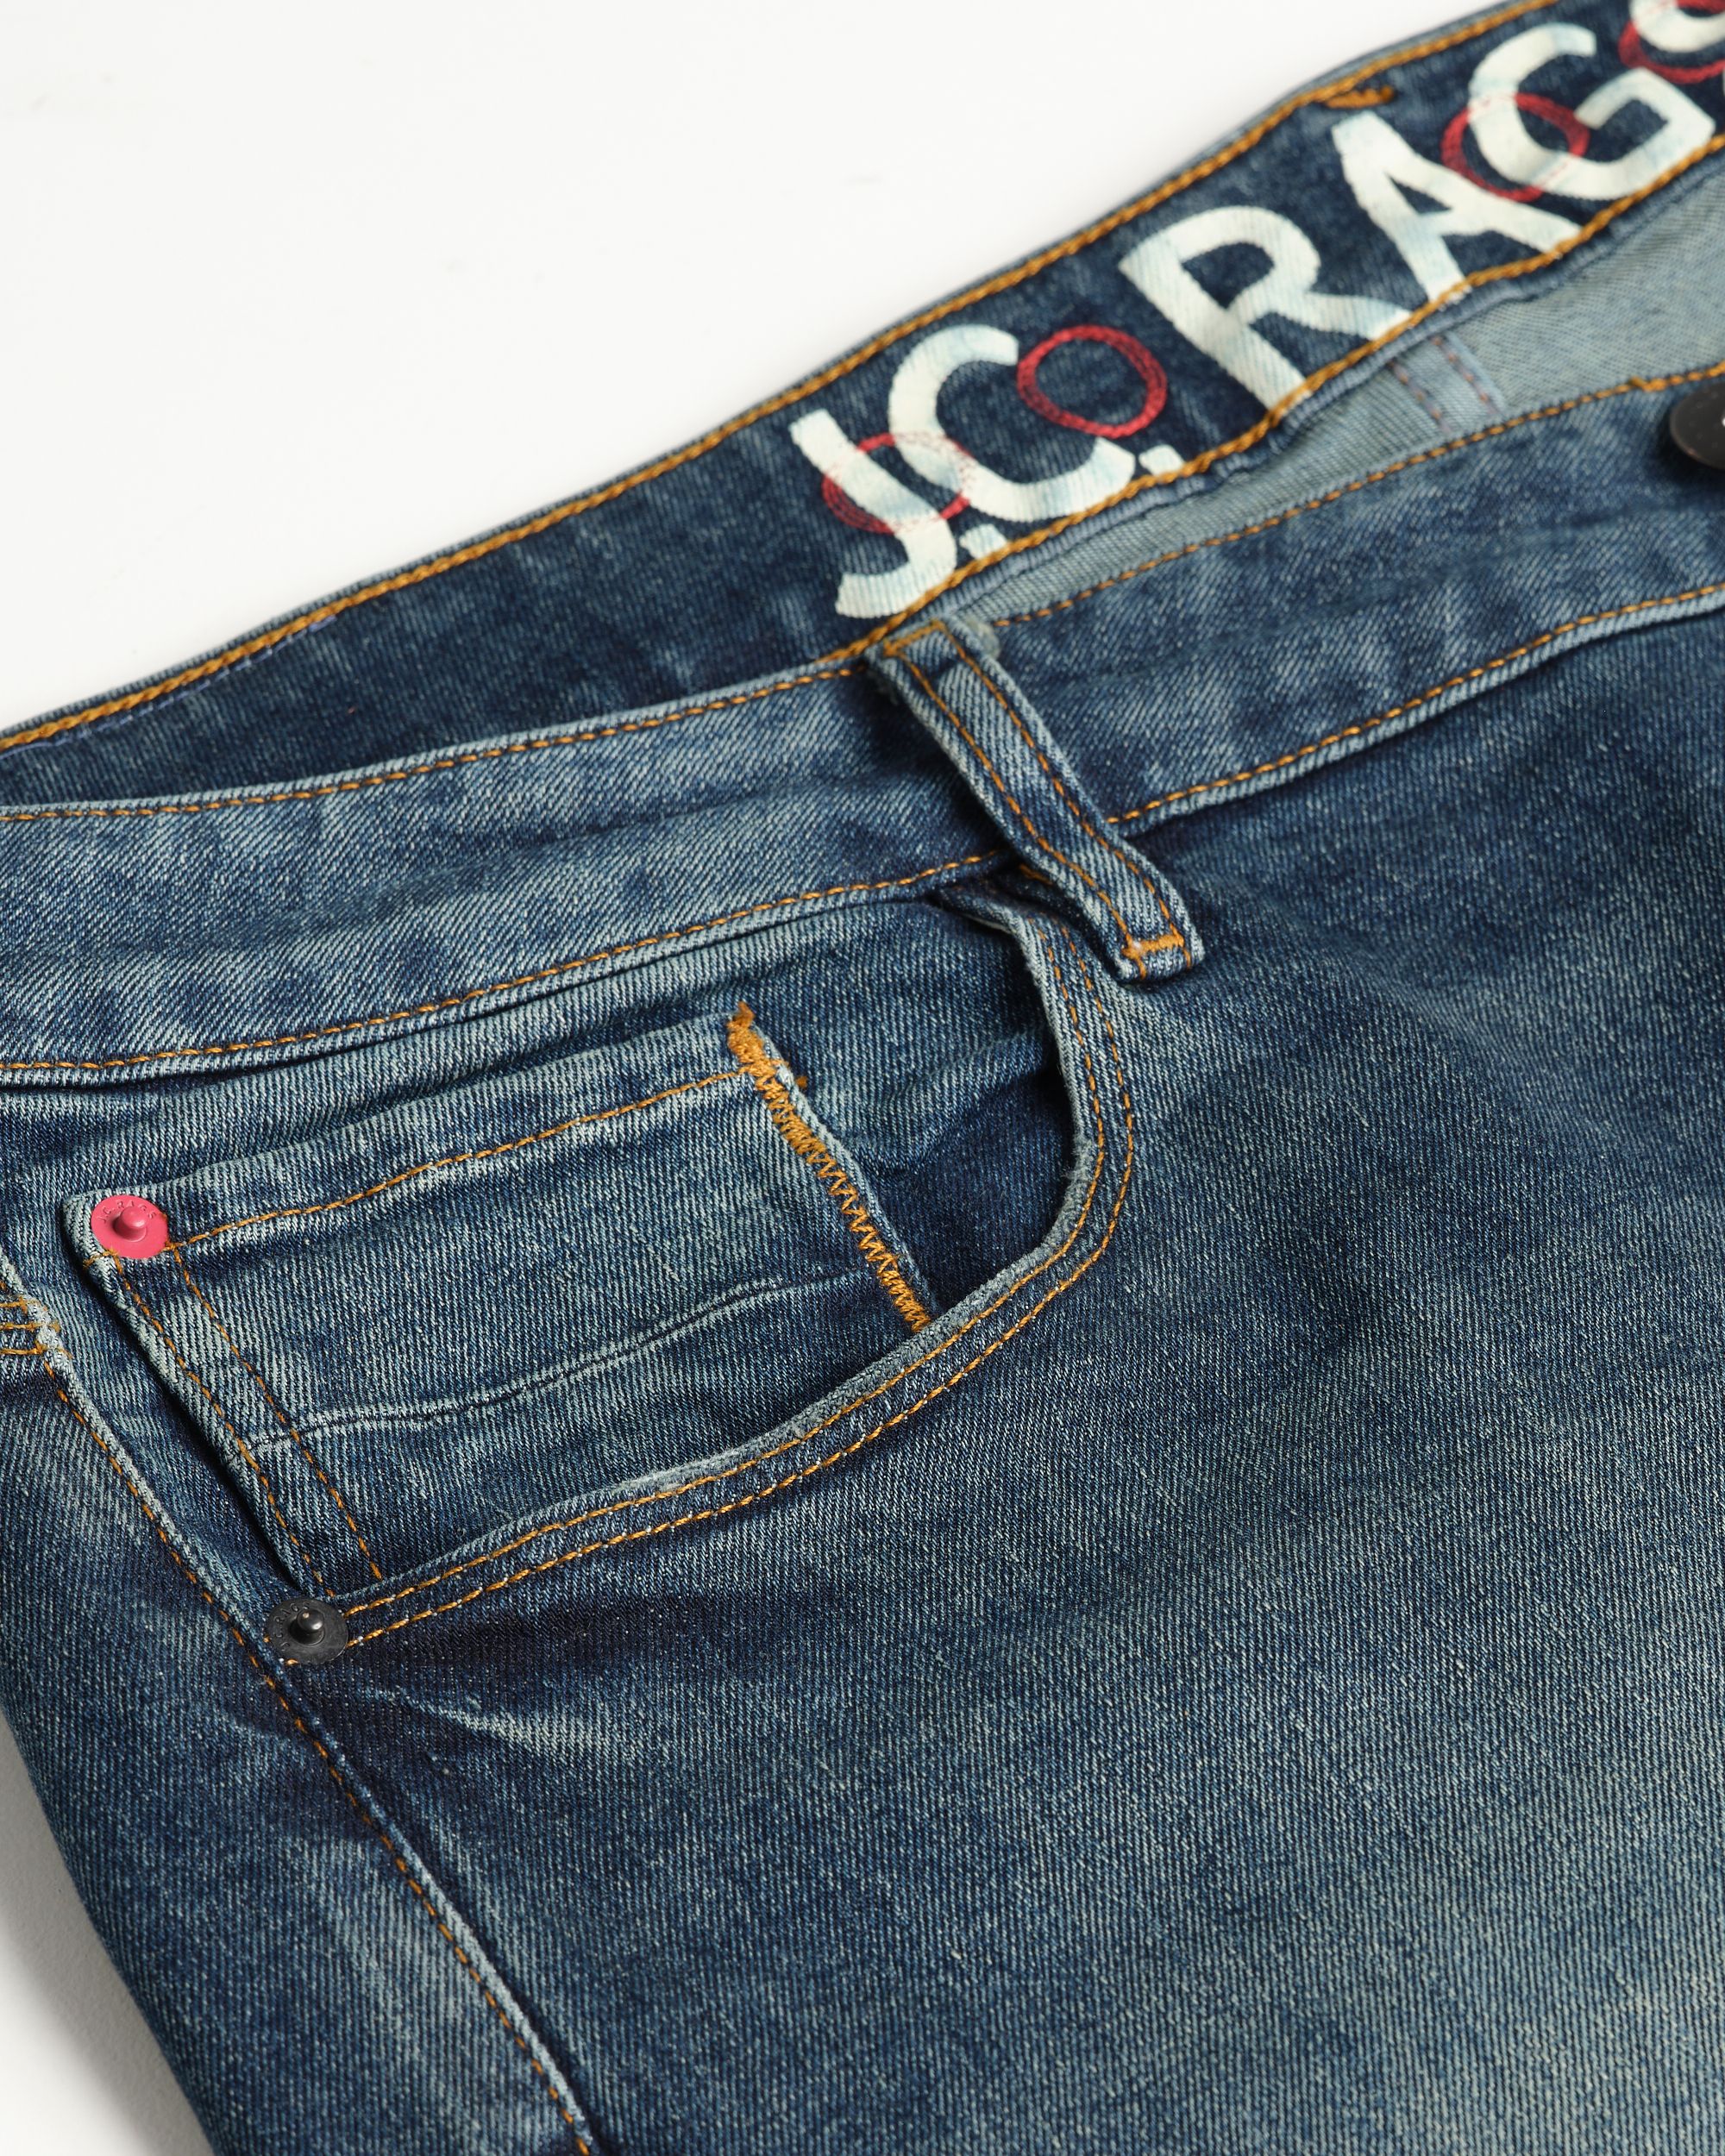 J.C. Rags Joah Heavy washed scraped Jeans True Navy 086001-001-29/32